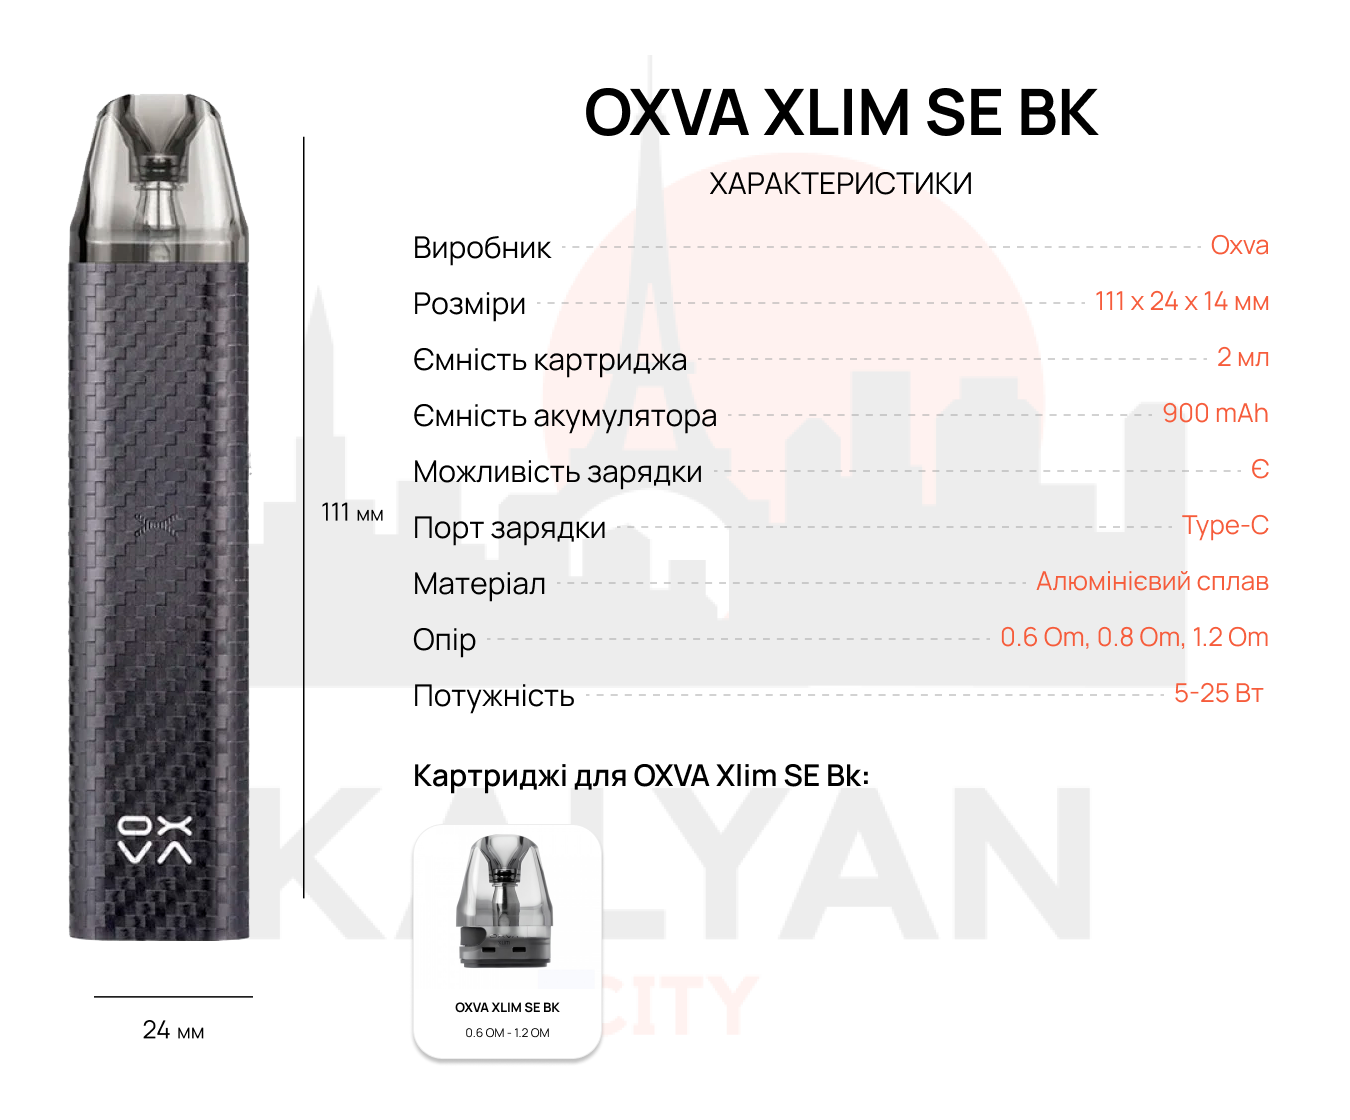 OXVA Xlim SE Bk Характеристики